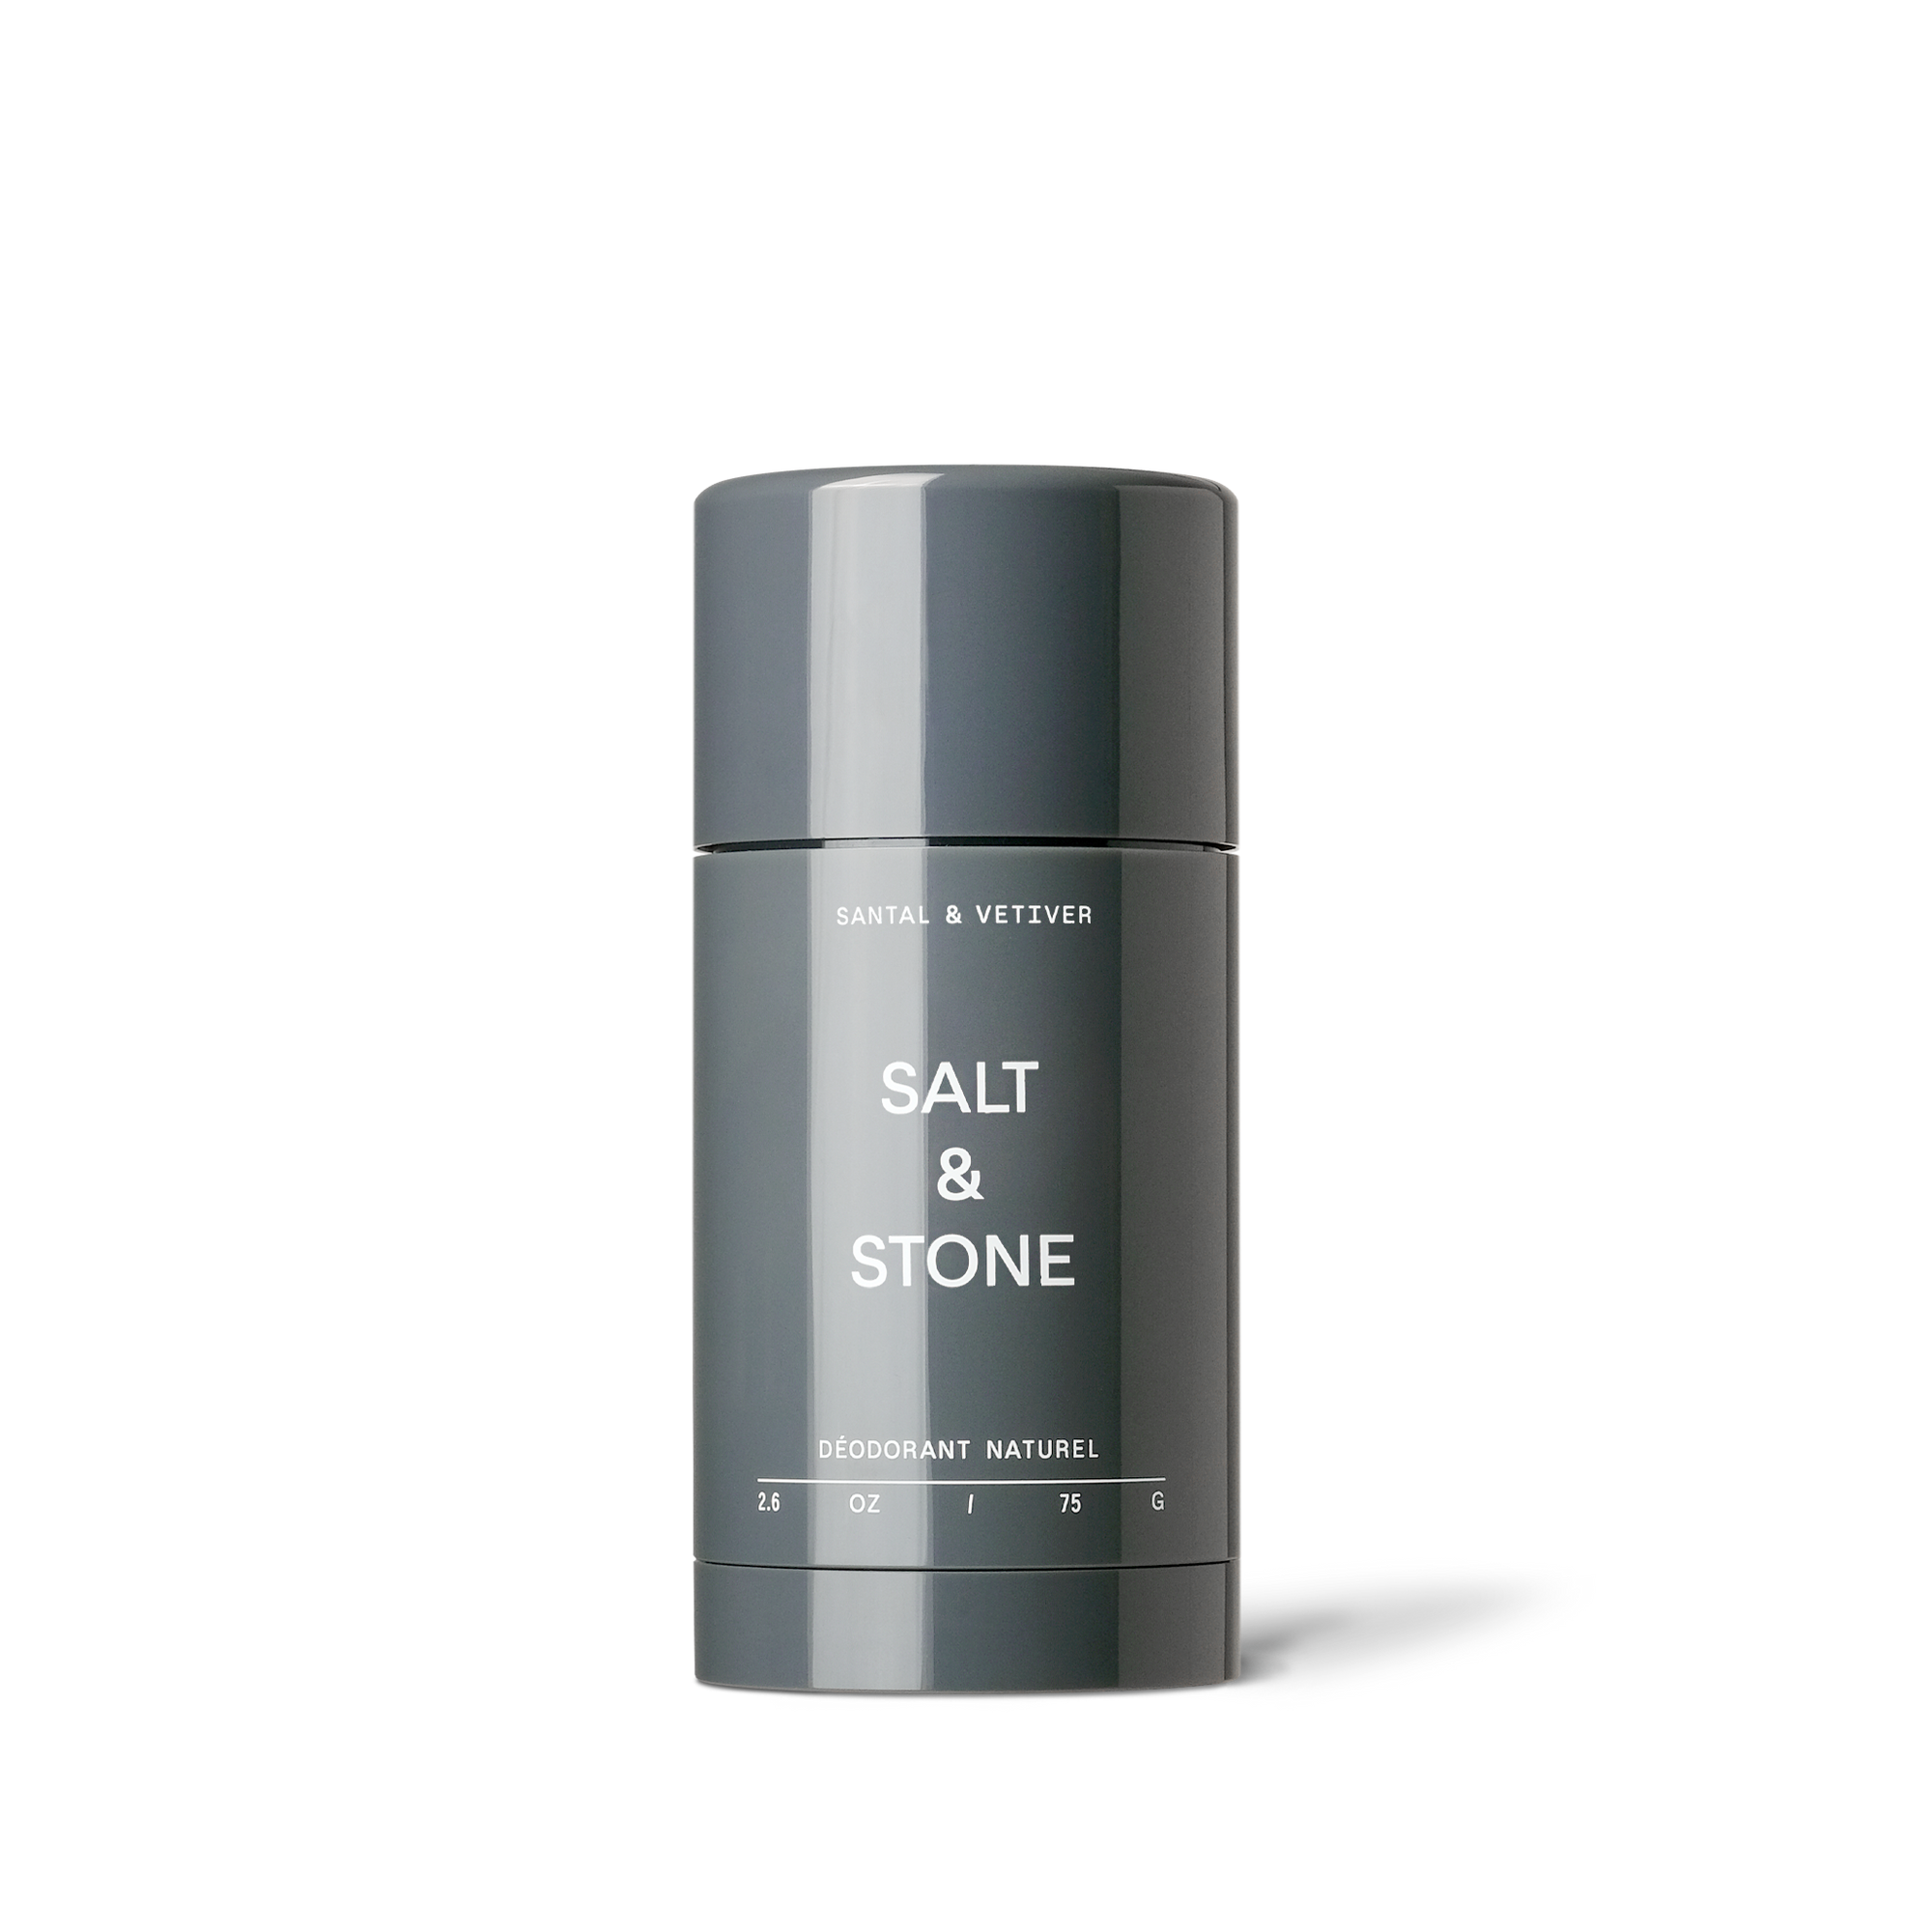 SALT & STONE | Natural Deodorant Gel | Santal & Vetiver